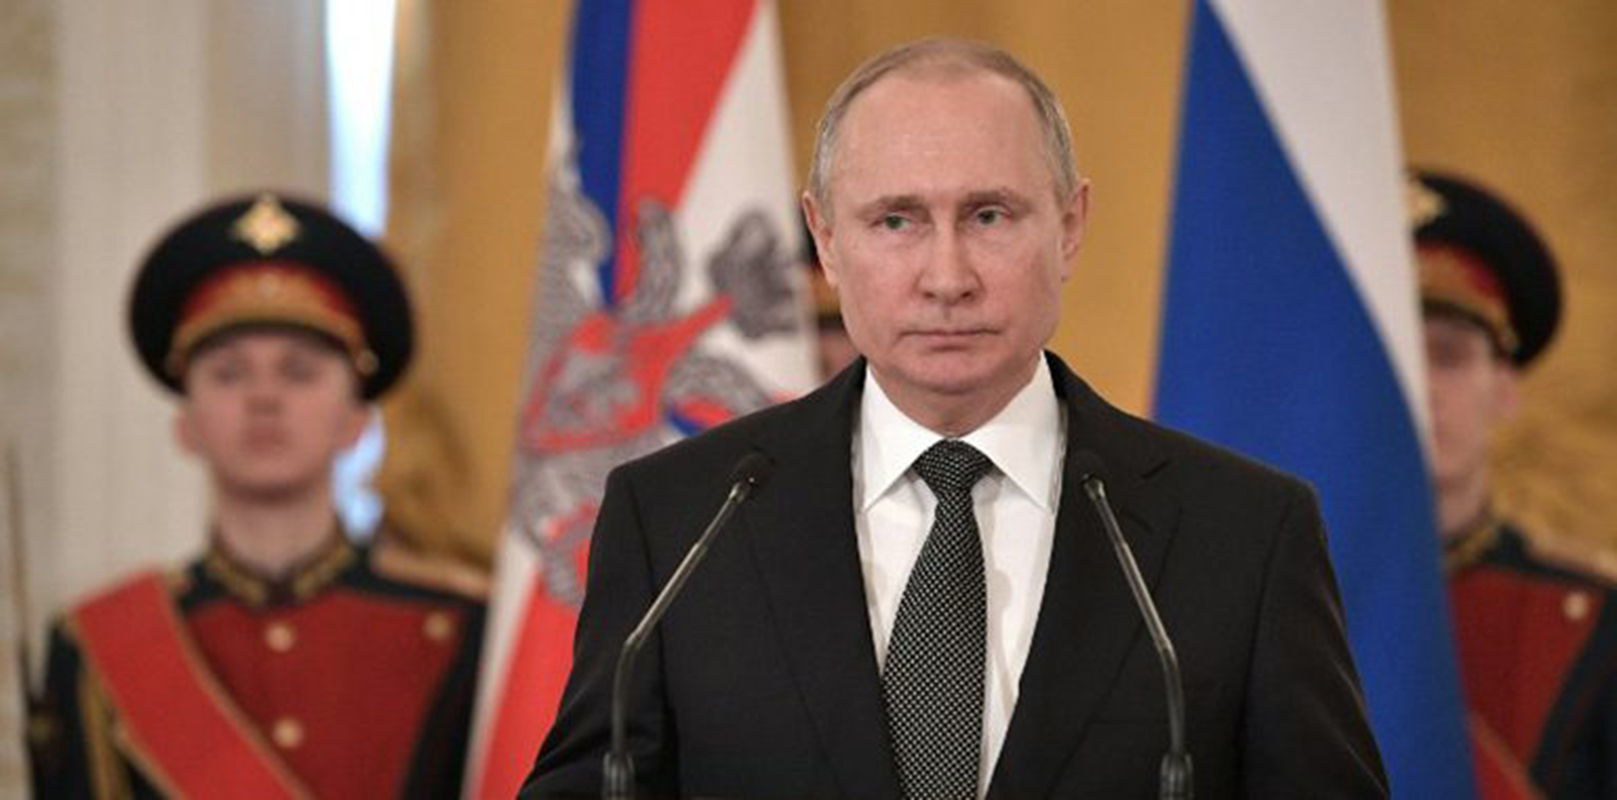 Putin se encamina a un nuevo triunfo electoral en Rusia, pese a críticas occidentales